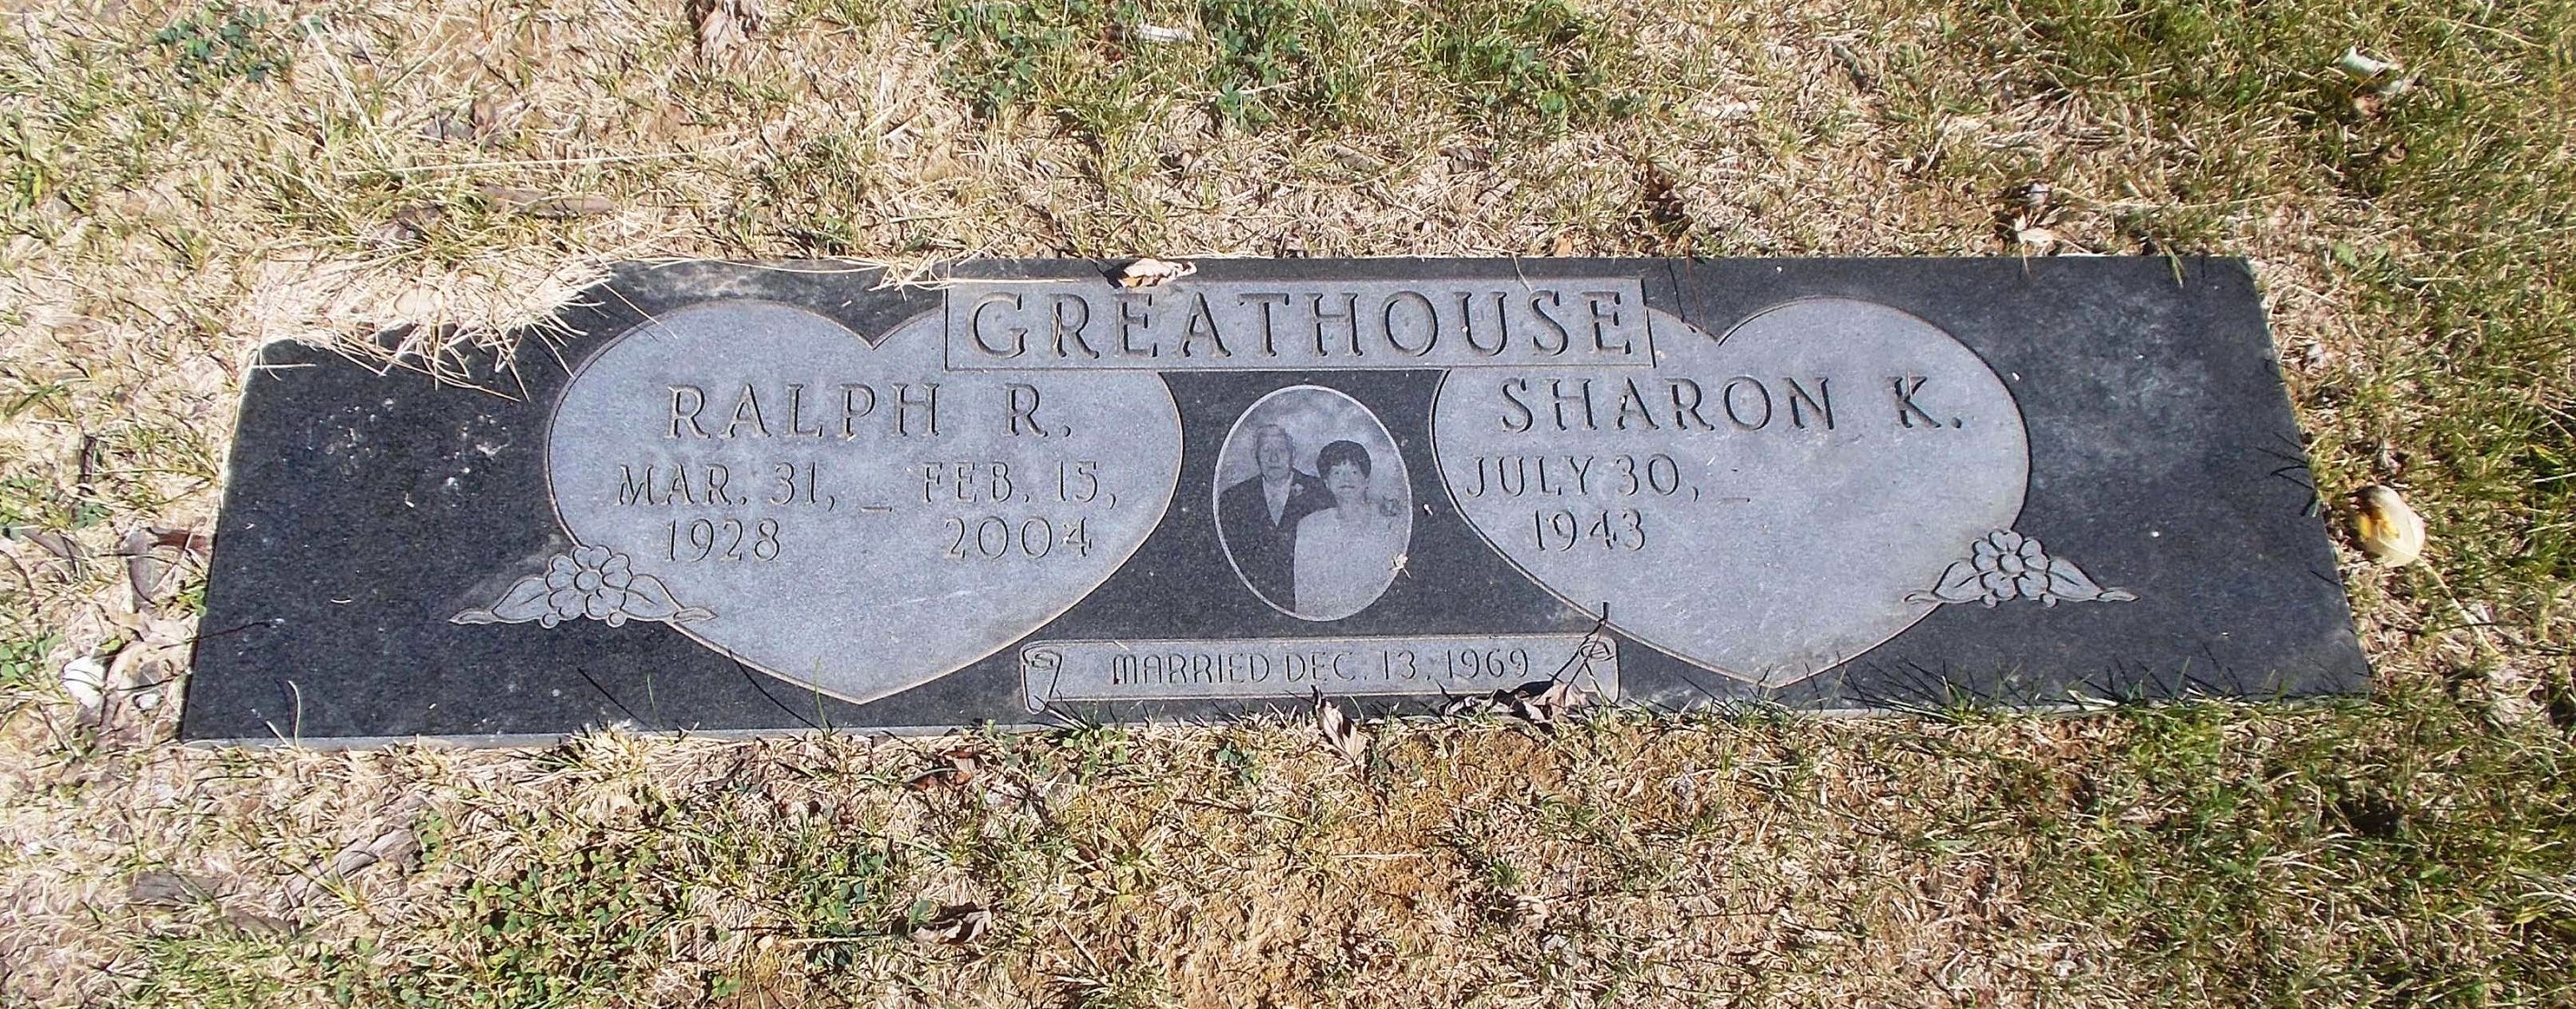 Ralph R Greathouse